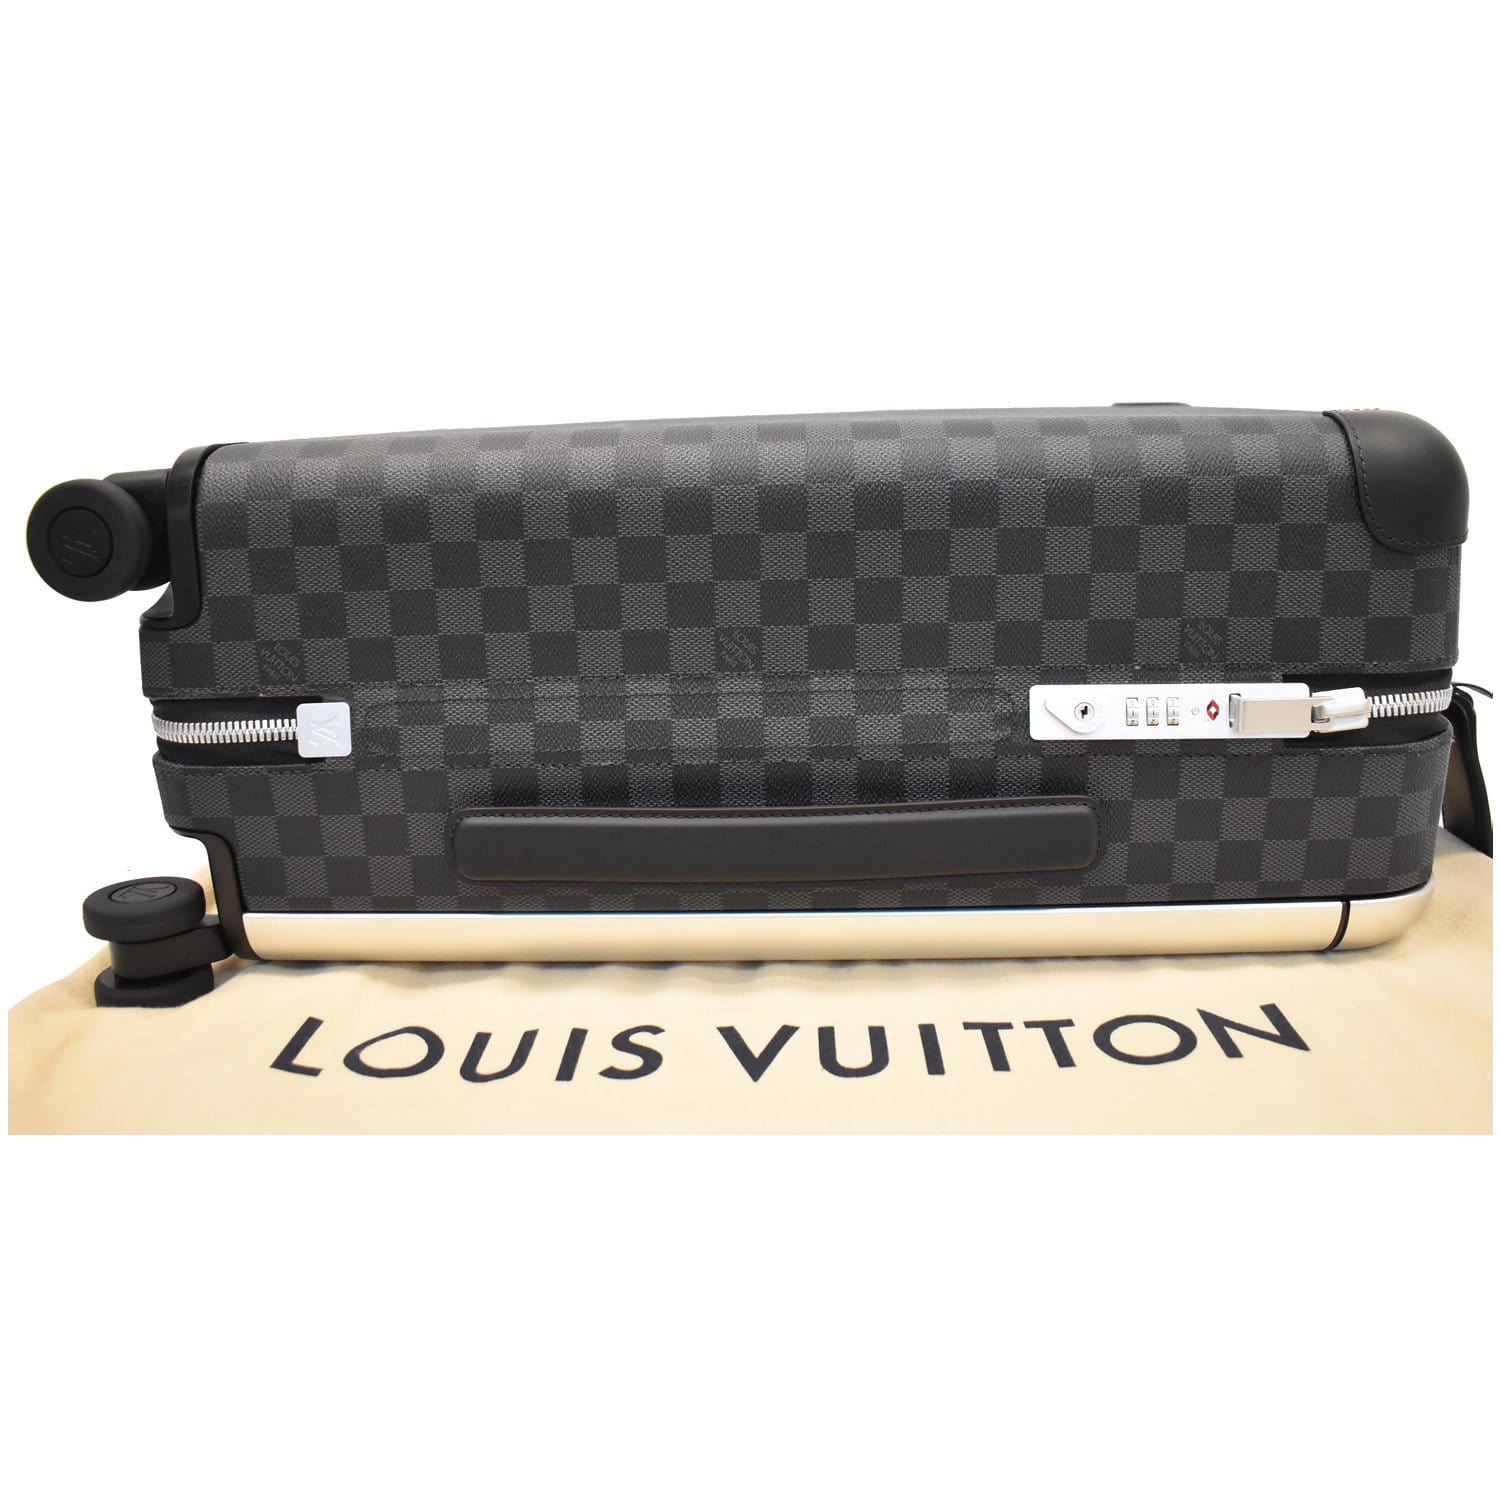 LOUIS VUITTON Horizon 55 Suitcase in Damier Graphite - 💯 AUTHENTIC -  N23209